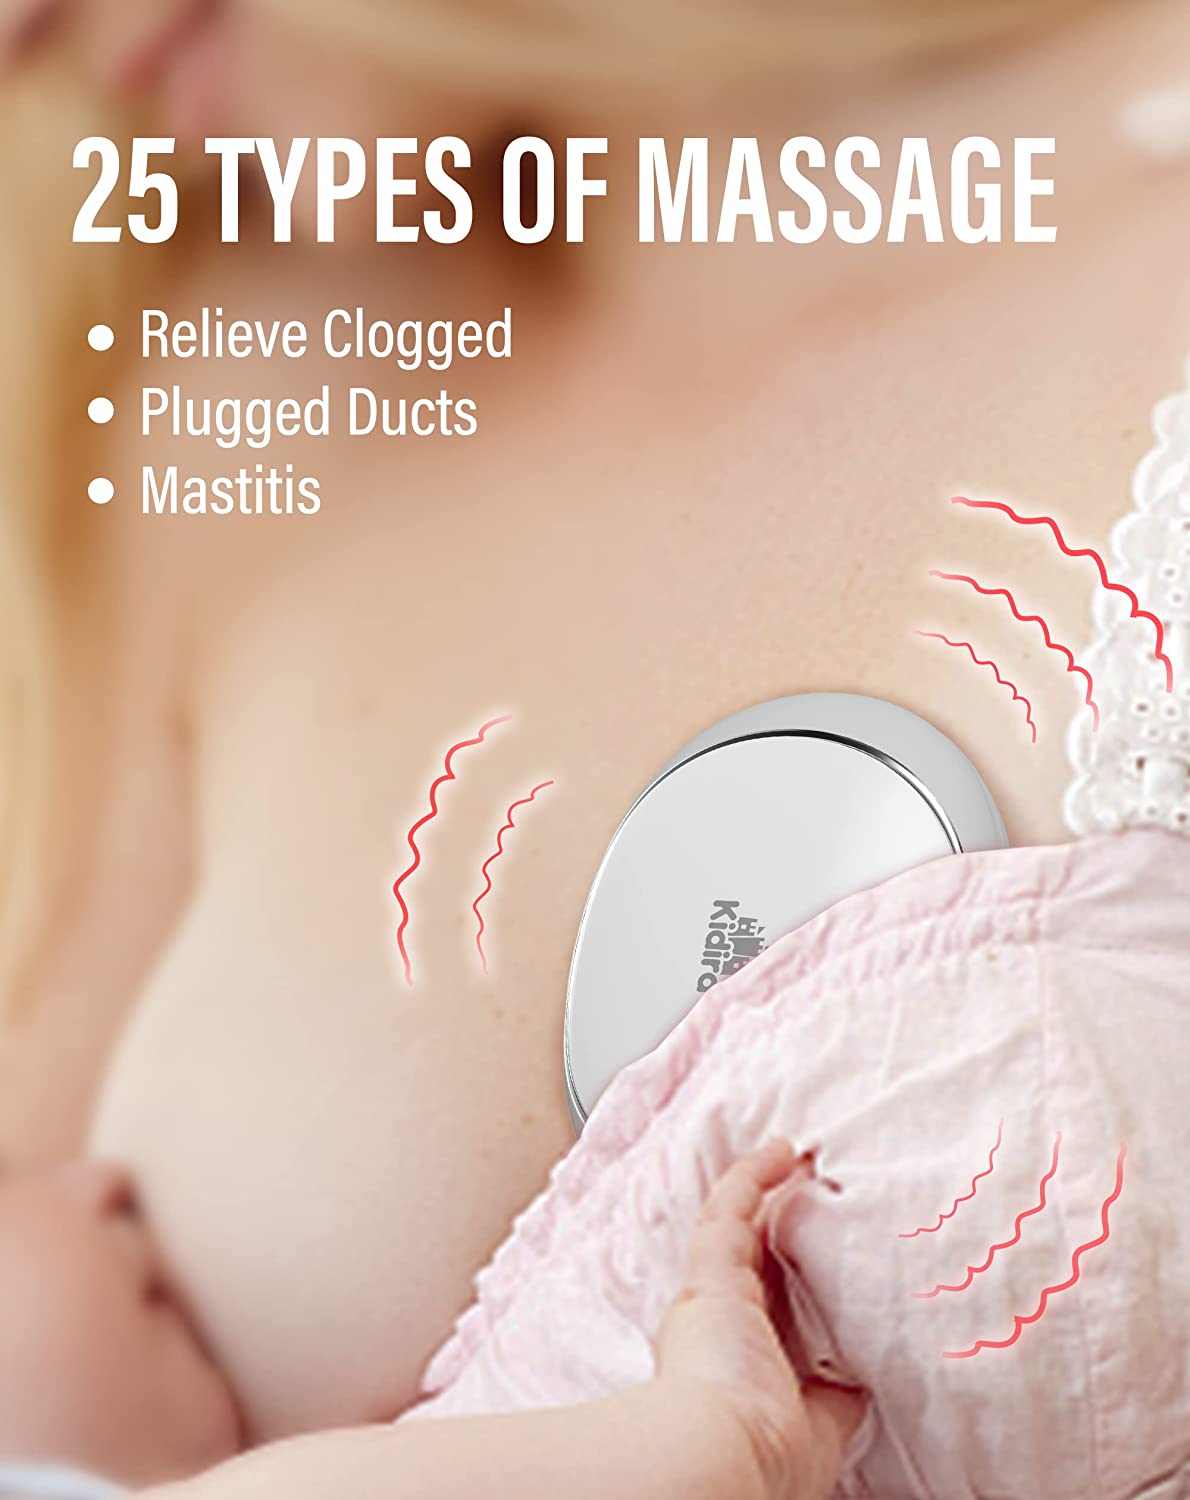 KIDIRA 2-in-1 Warming Lactation Massager, Soft Breast Massager for Bre –  kidirastore